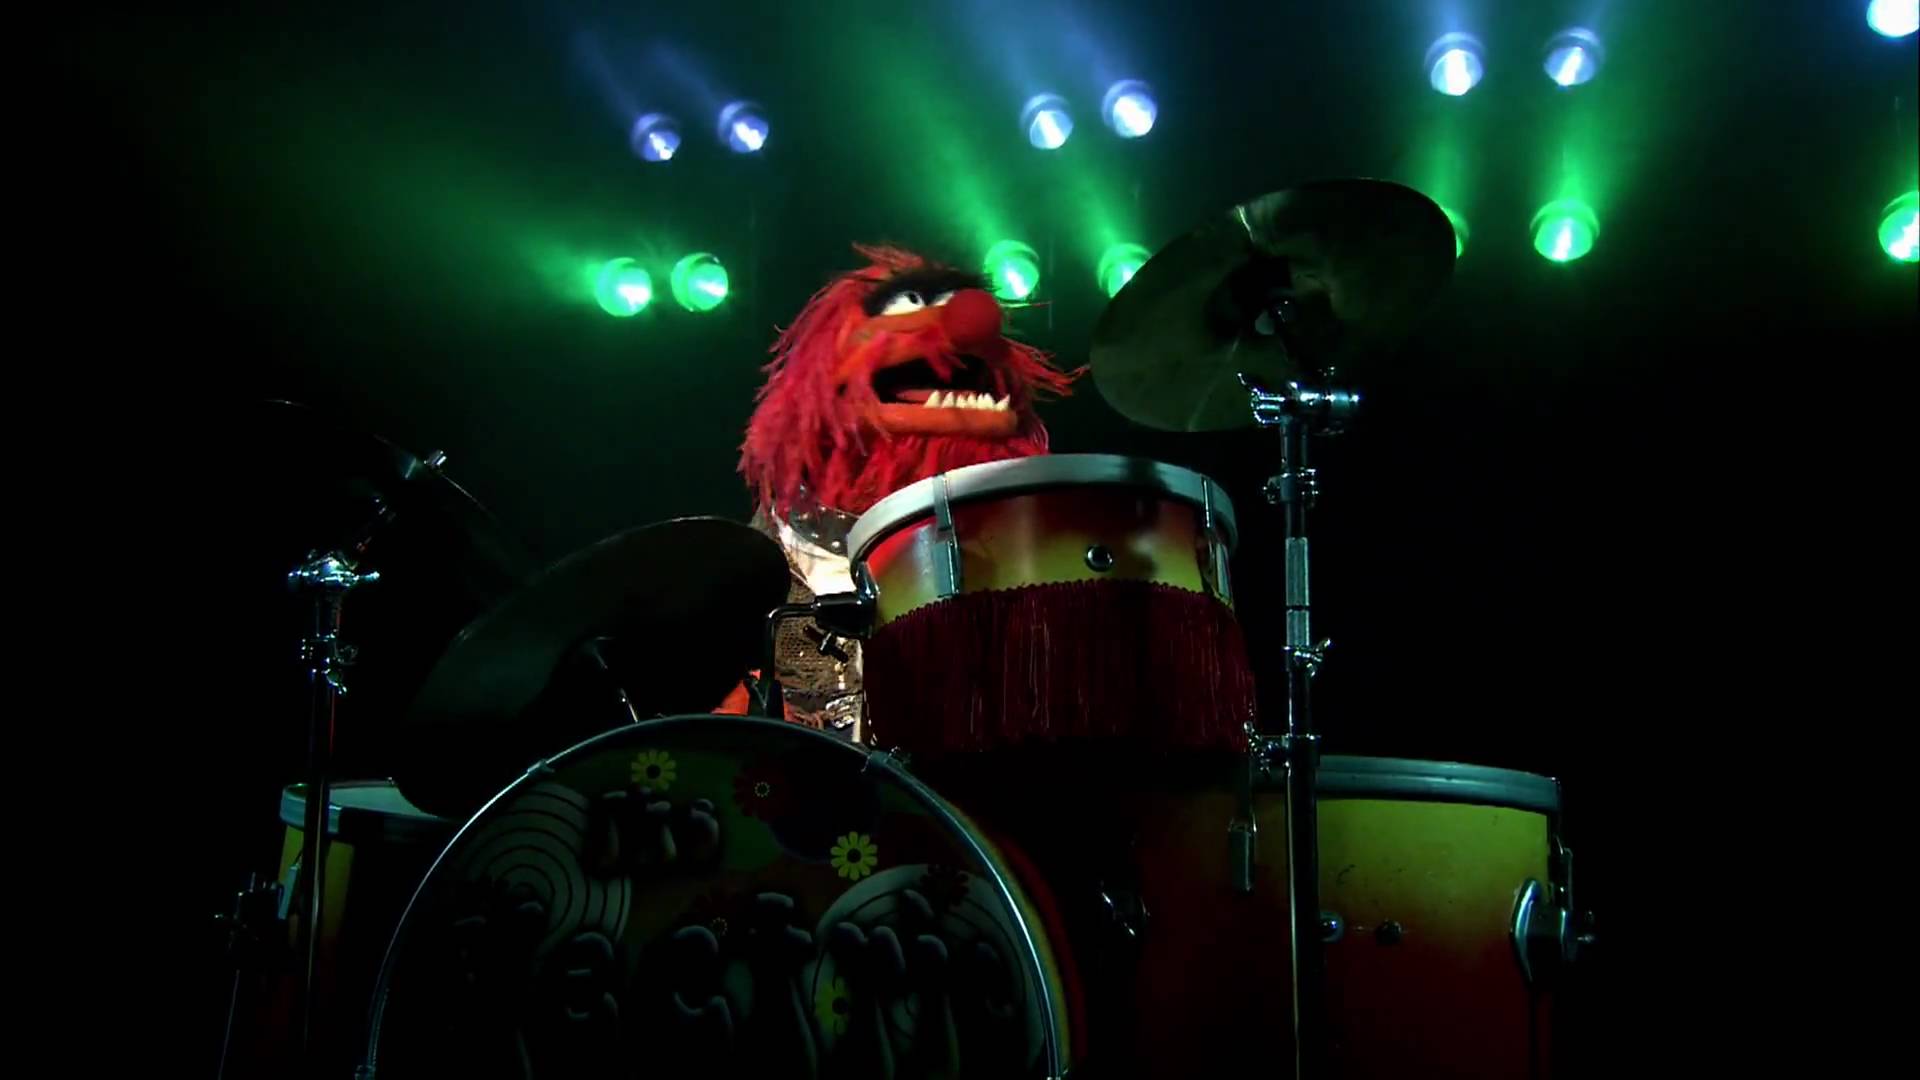 Muppets Beaker Wallpaper - Bohemian Rhapsody Muppet Music Video The Muppets - HD Wallpaper 